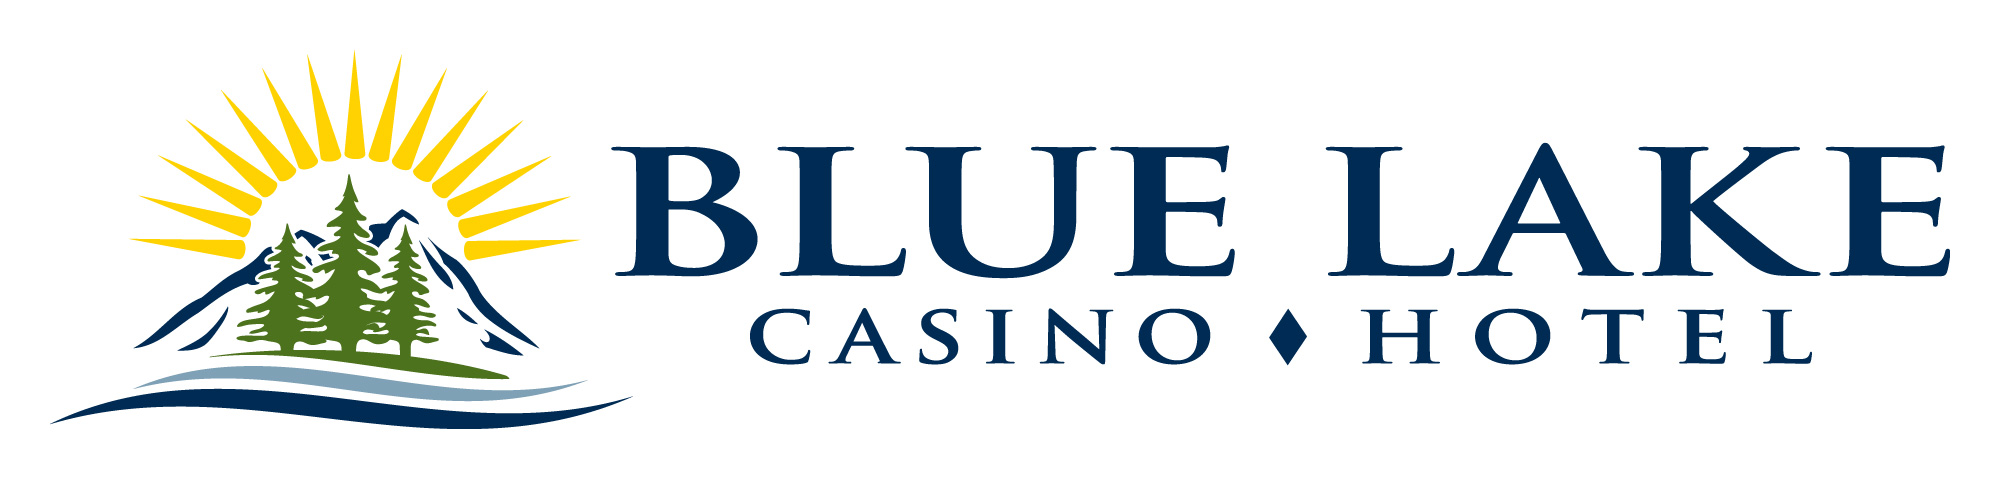 "1. Blue Lake Casino & Hotel (Presenting)."